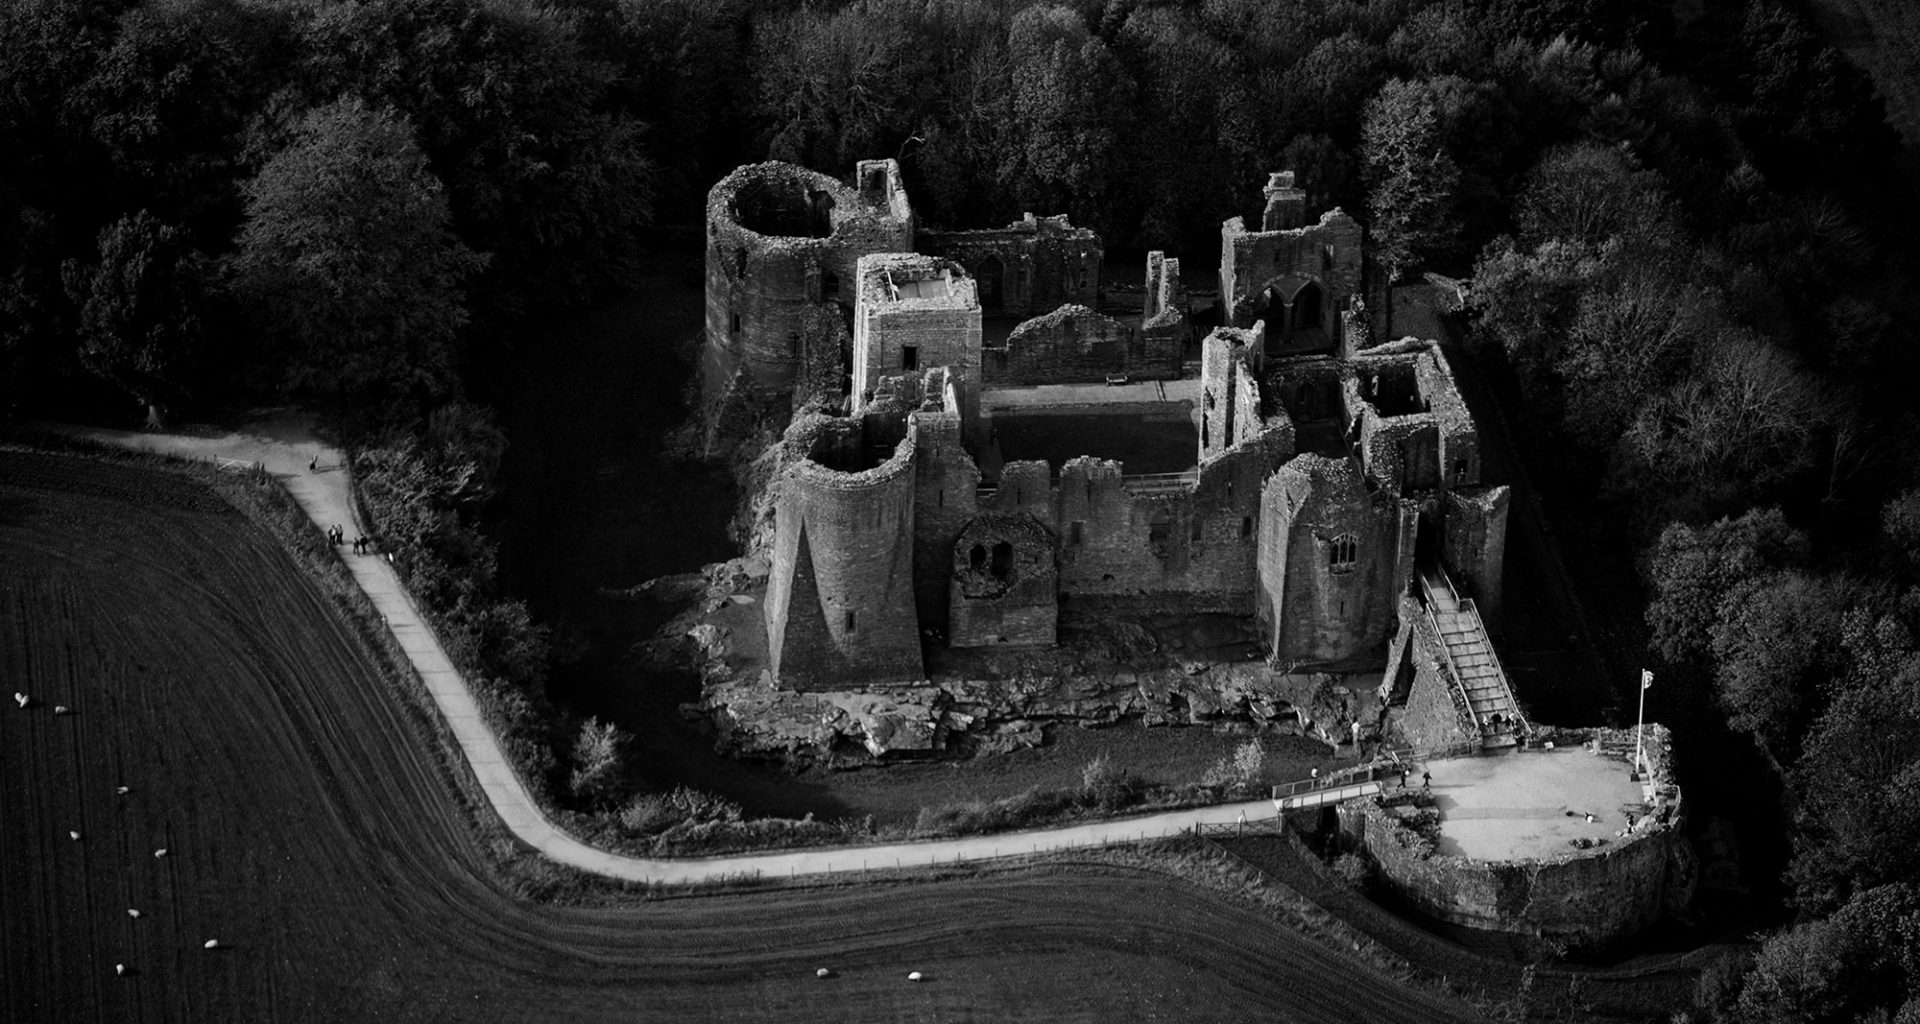 Goodrich castle english heritage virtual tour